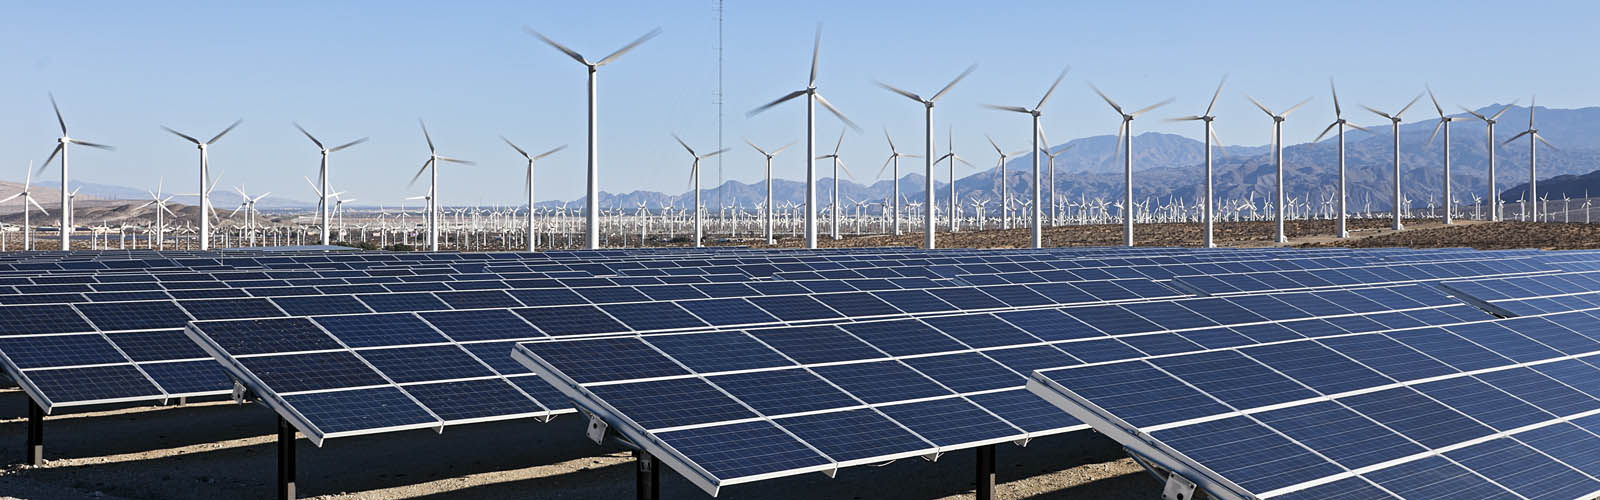 Solar-panels-windfarm-01-1600x500-1